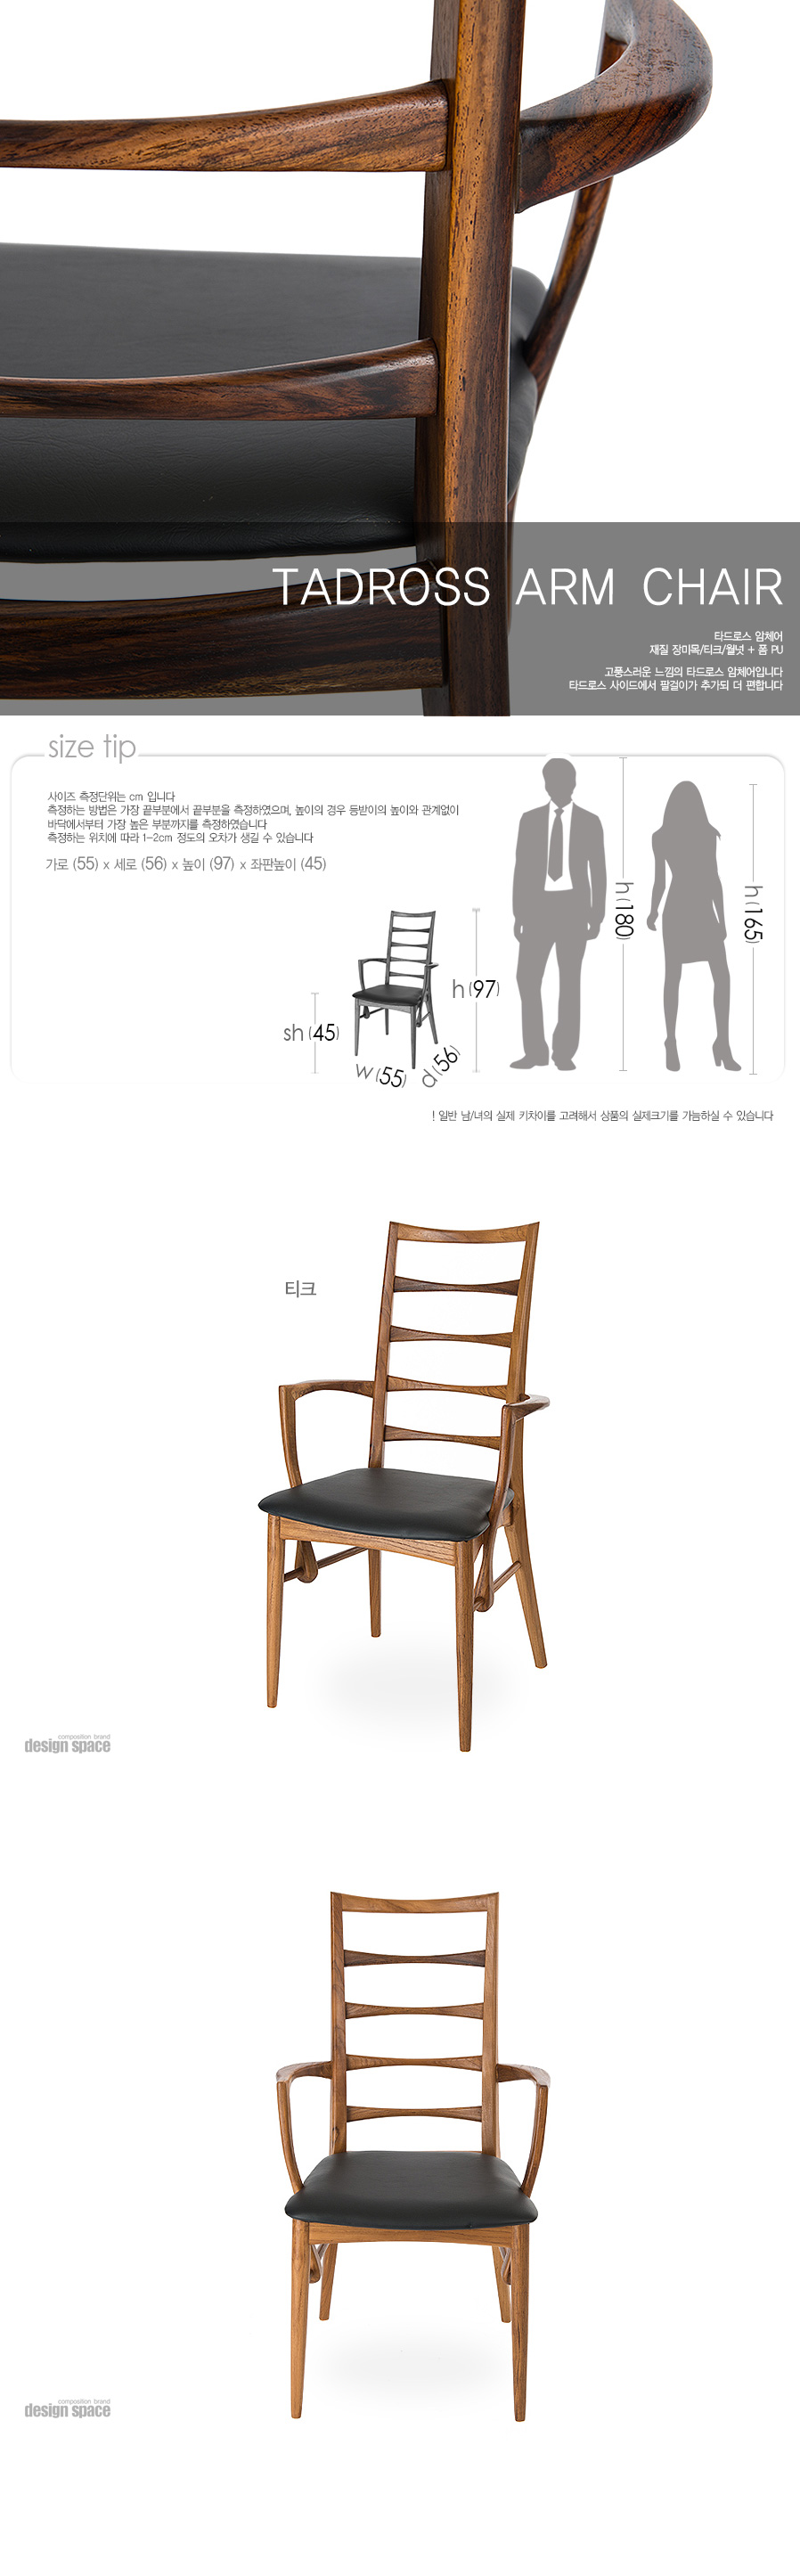 Tadross-arm-chair(타드로스-암체어)_01.jpg